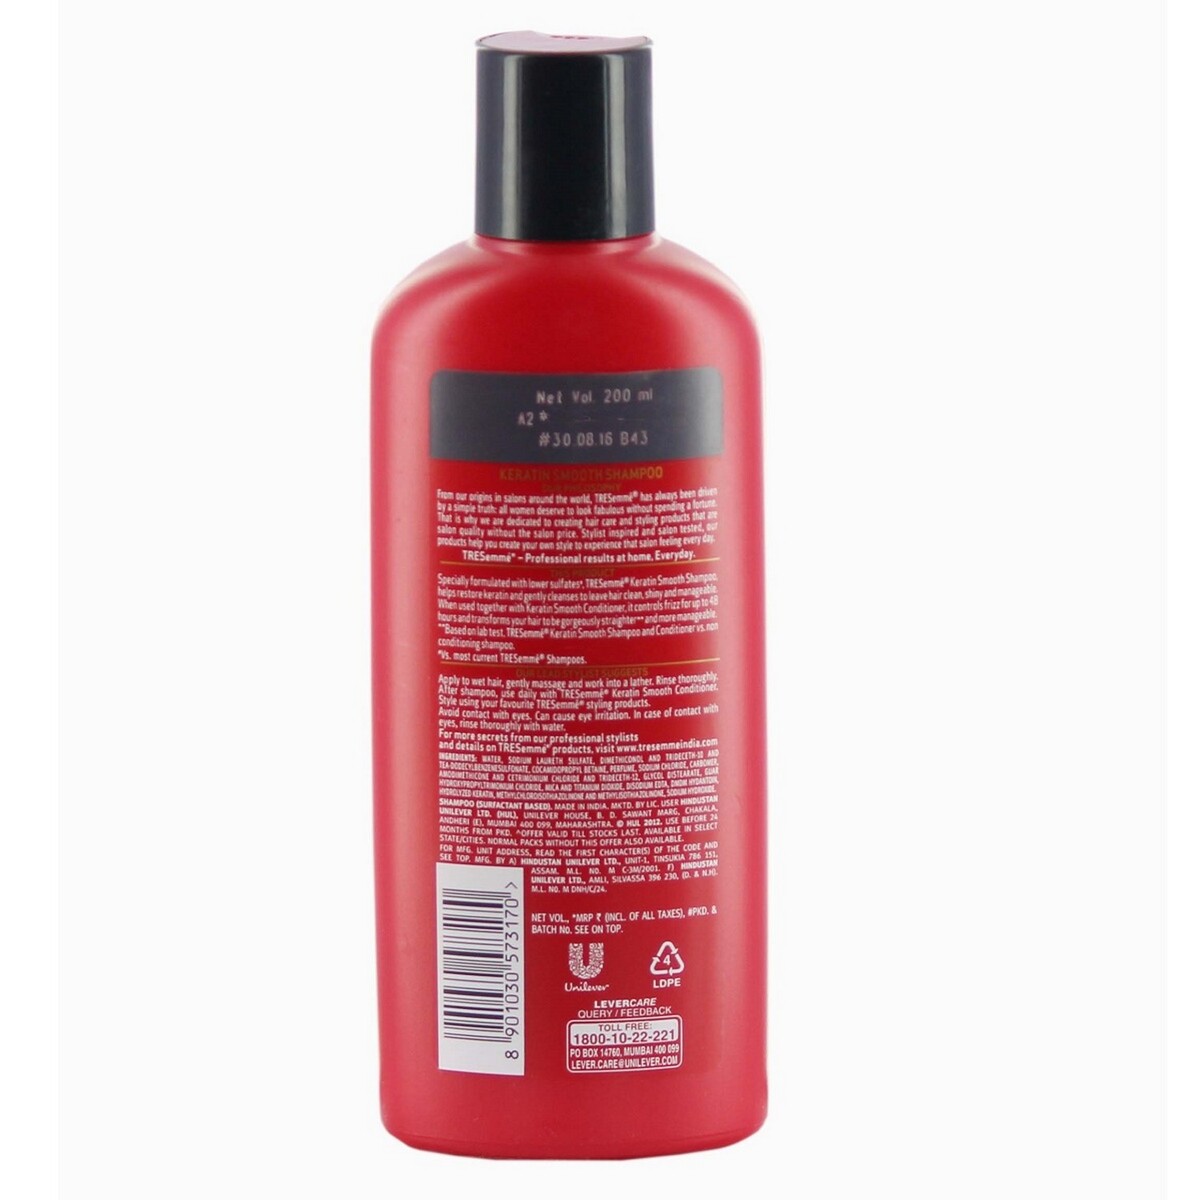 TRESemme Shampoo Keratin Smooth 190ml